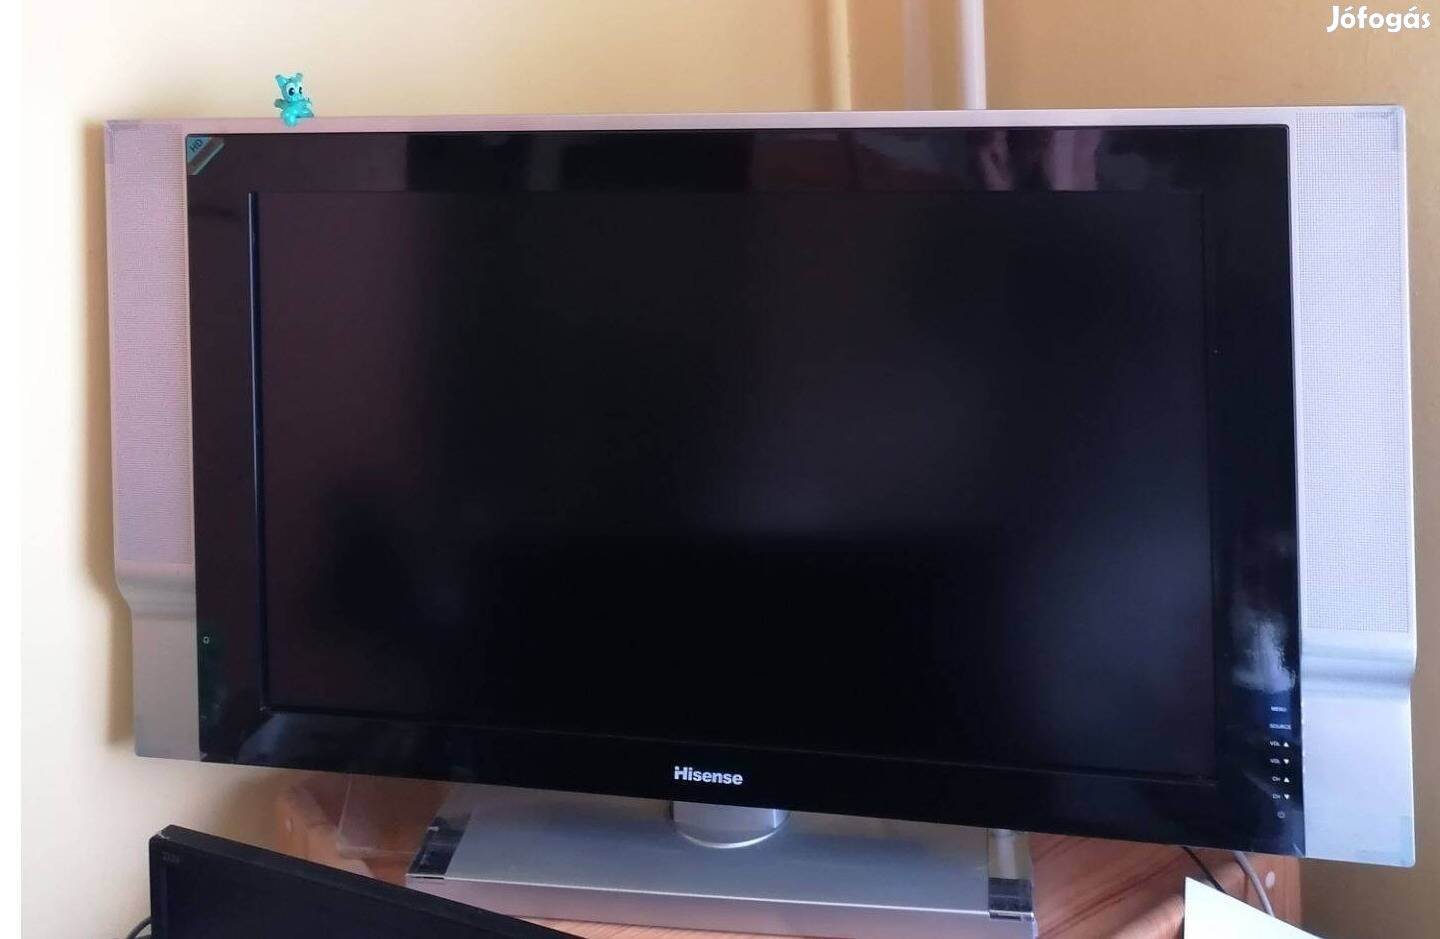 Hisense LCD TV eladó